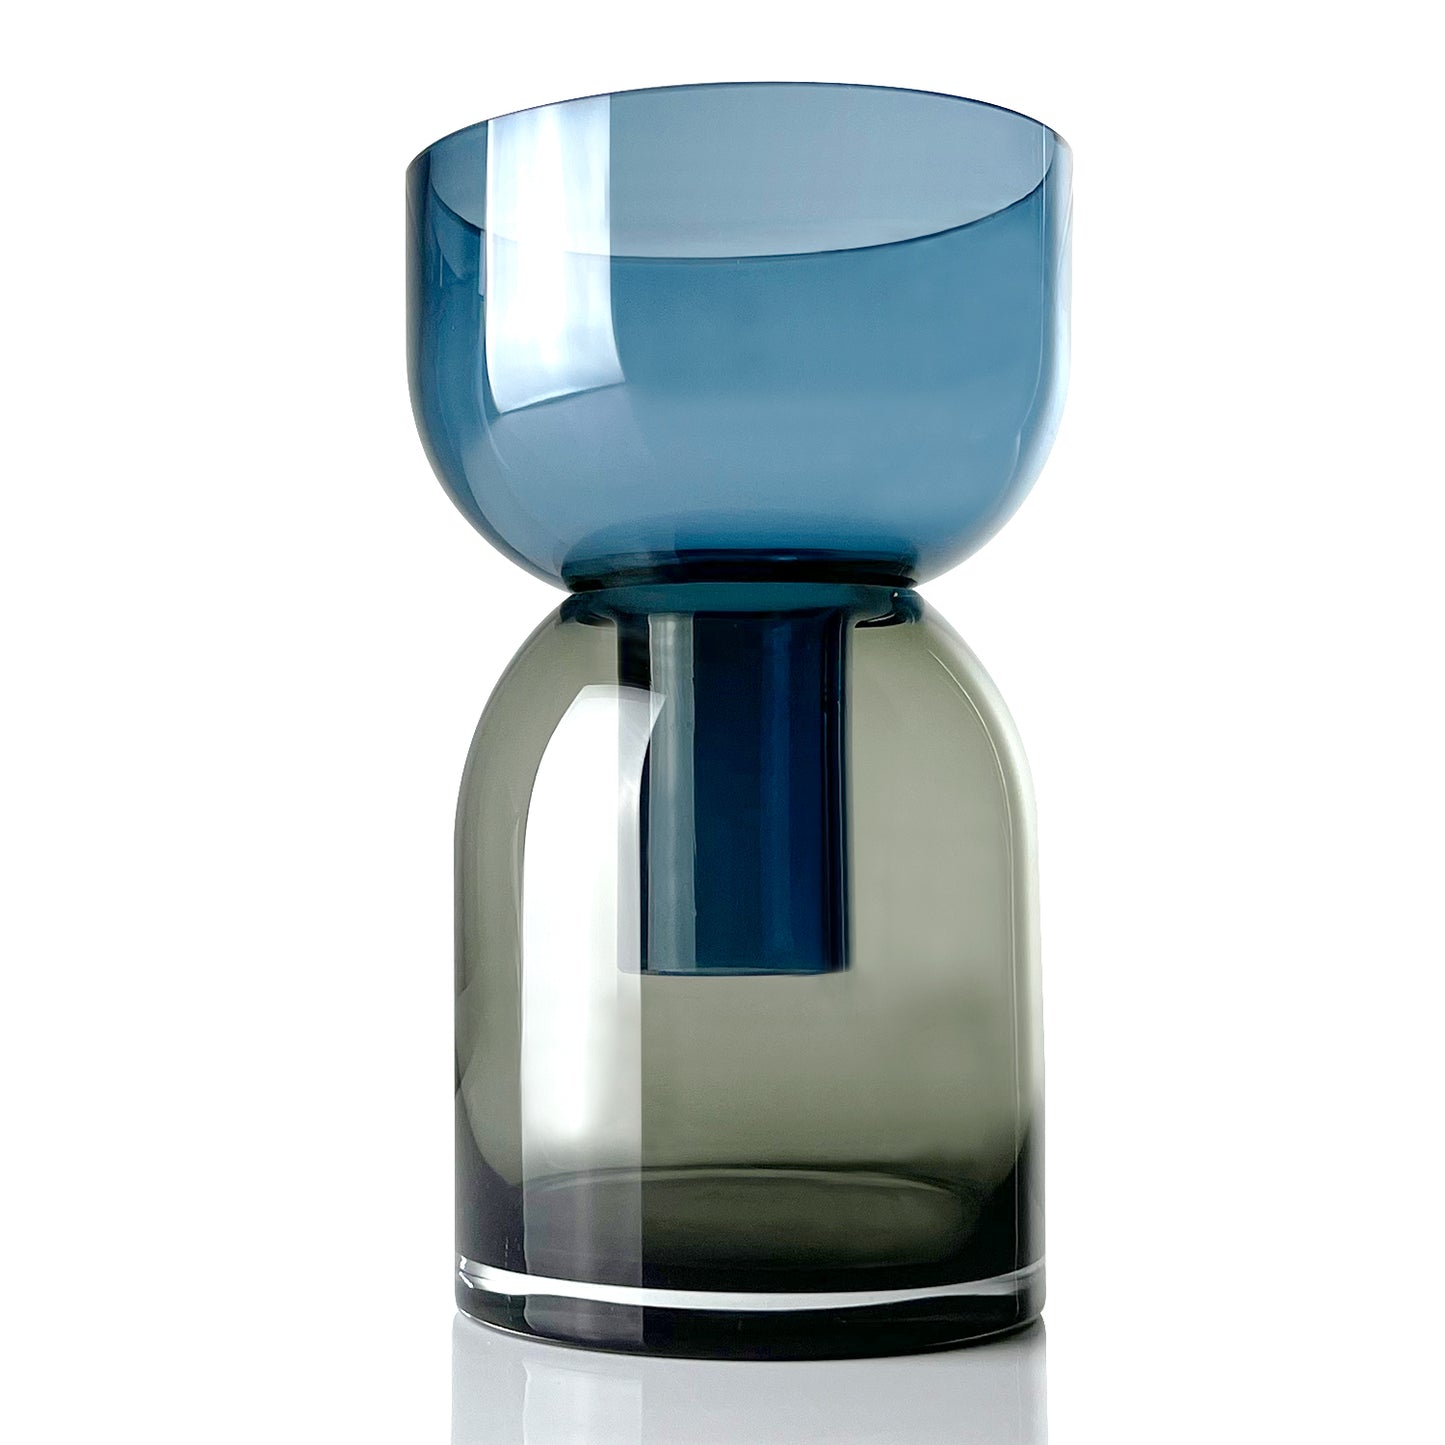 Flip Vase Medium Blue and Gray - Vase - Reversible - Borosilicate Glass - Dual Sided - Floral